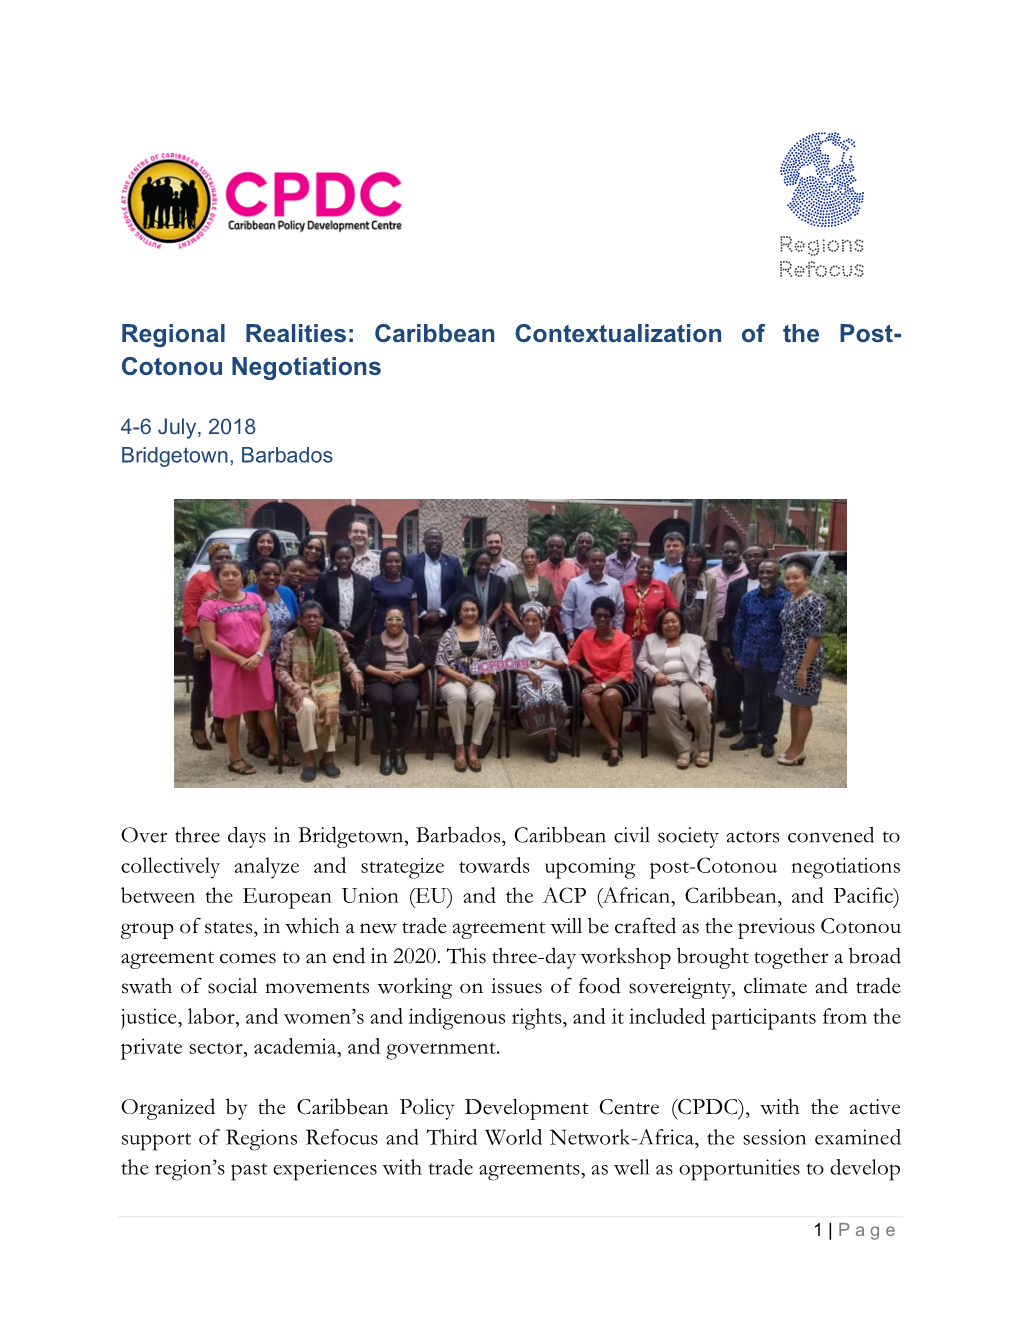 Caribbean Contextualization of the Post- Cotonou Negotiations